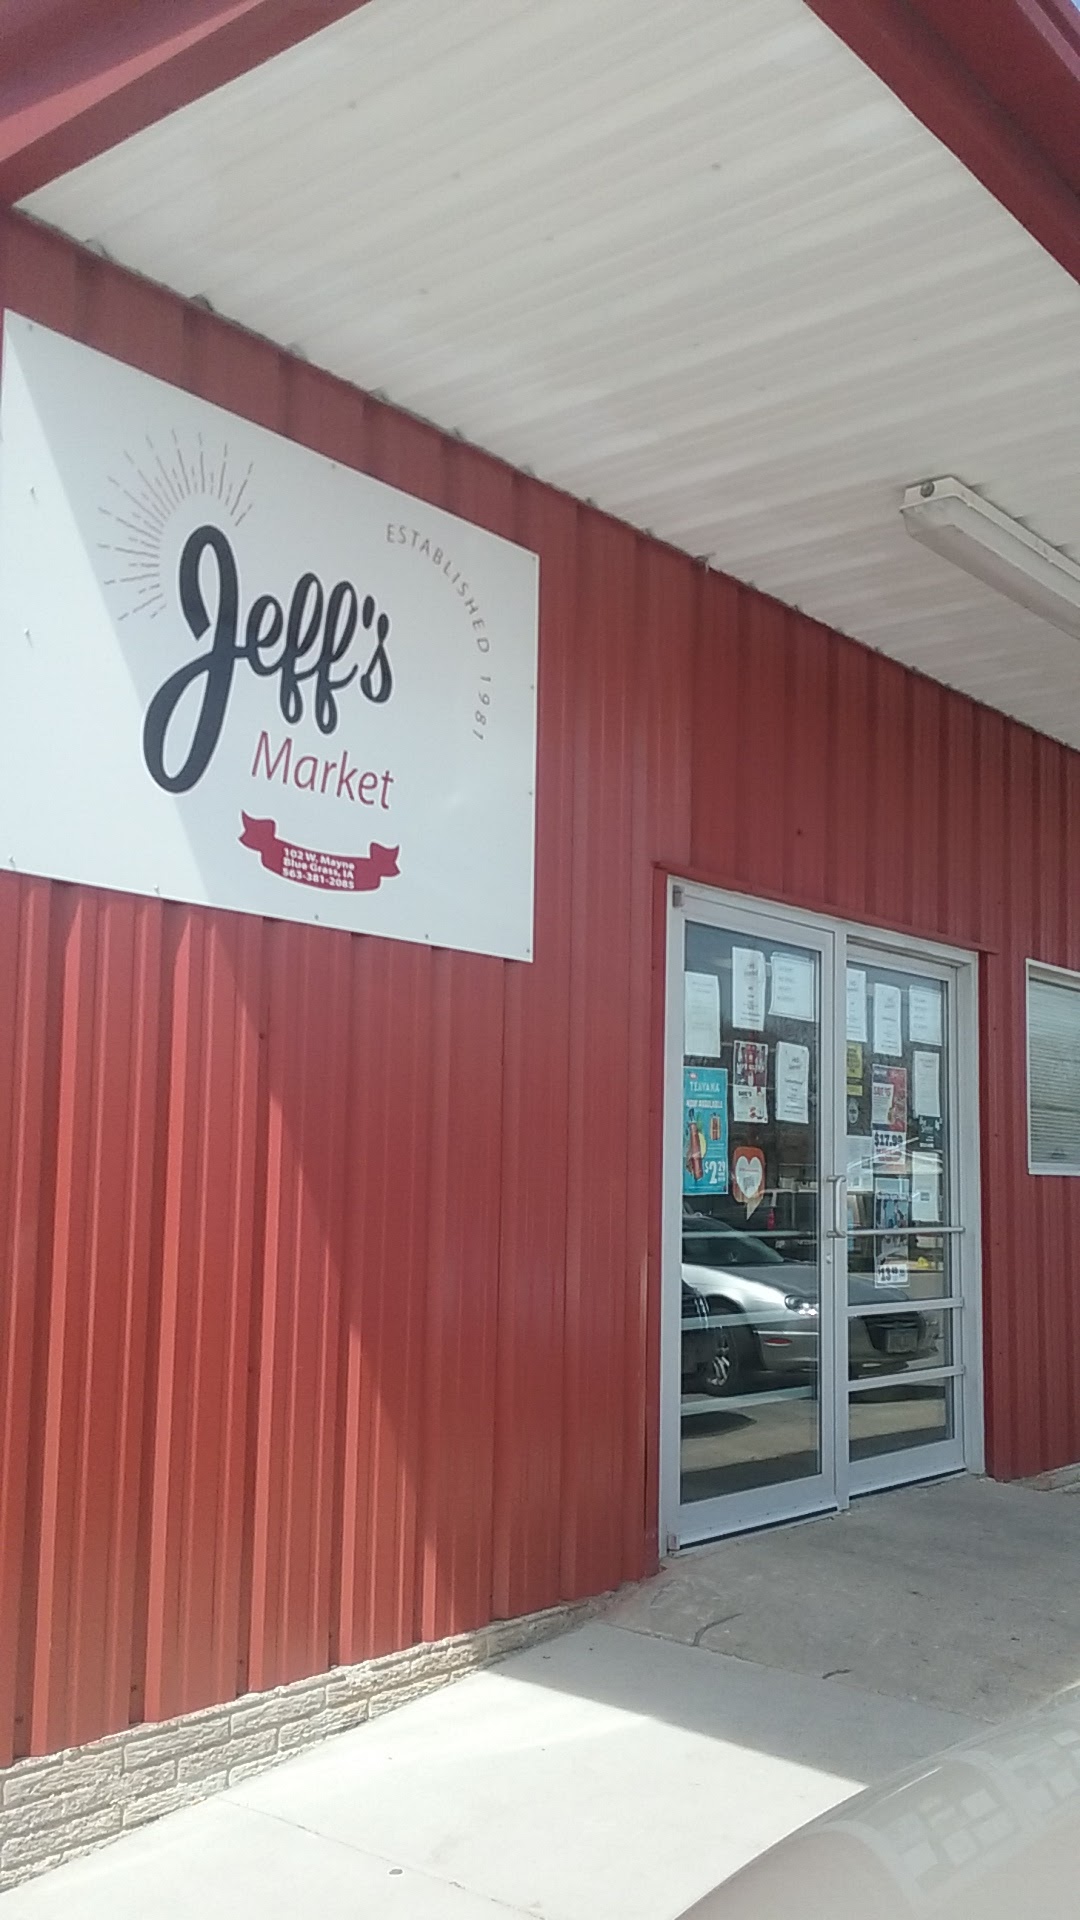 Jeff's Market